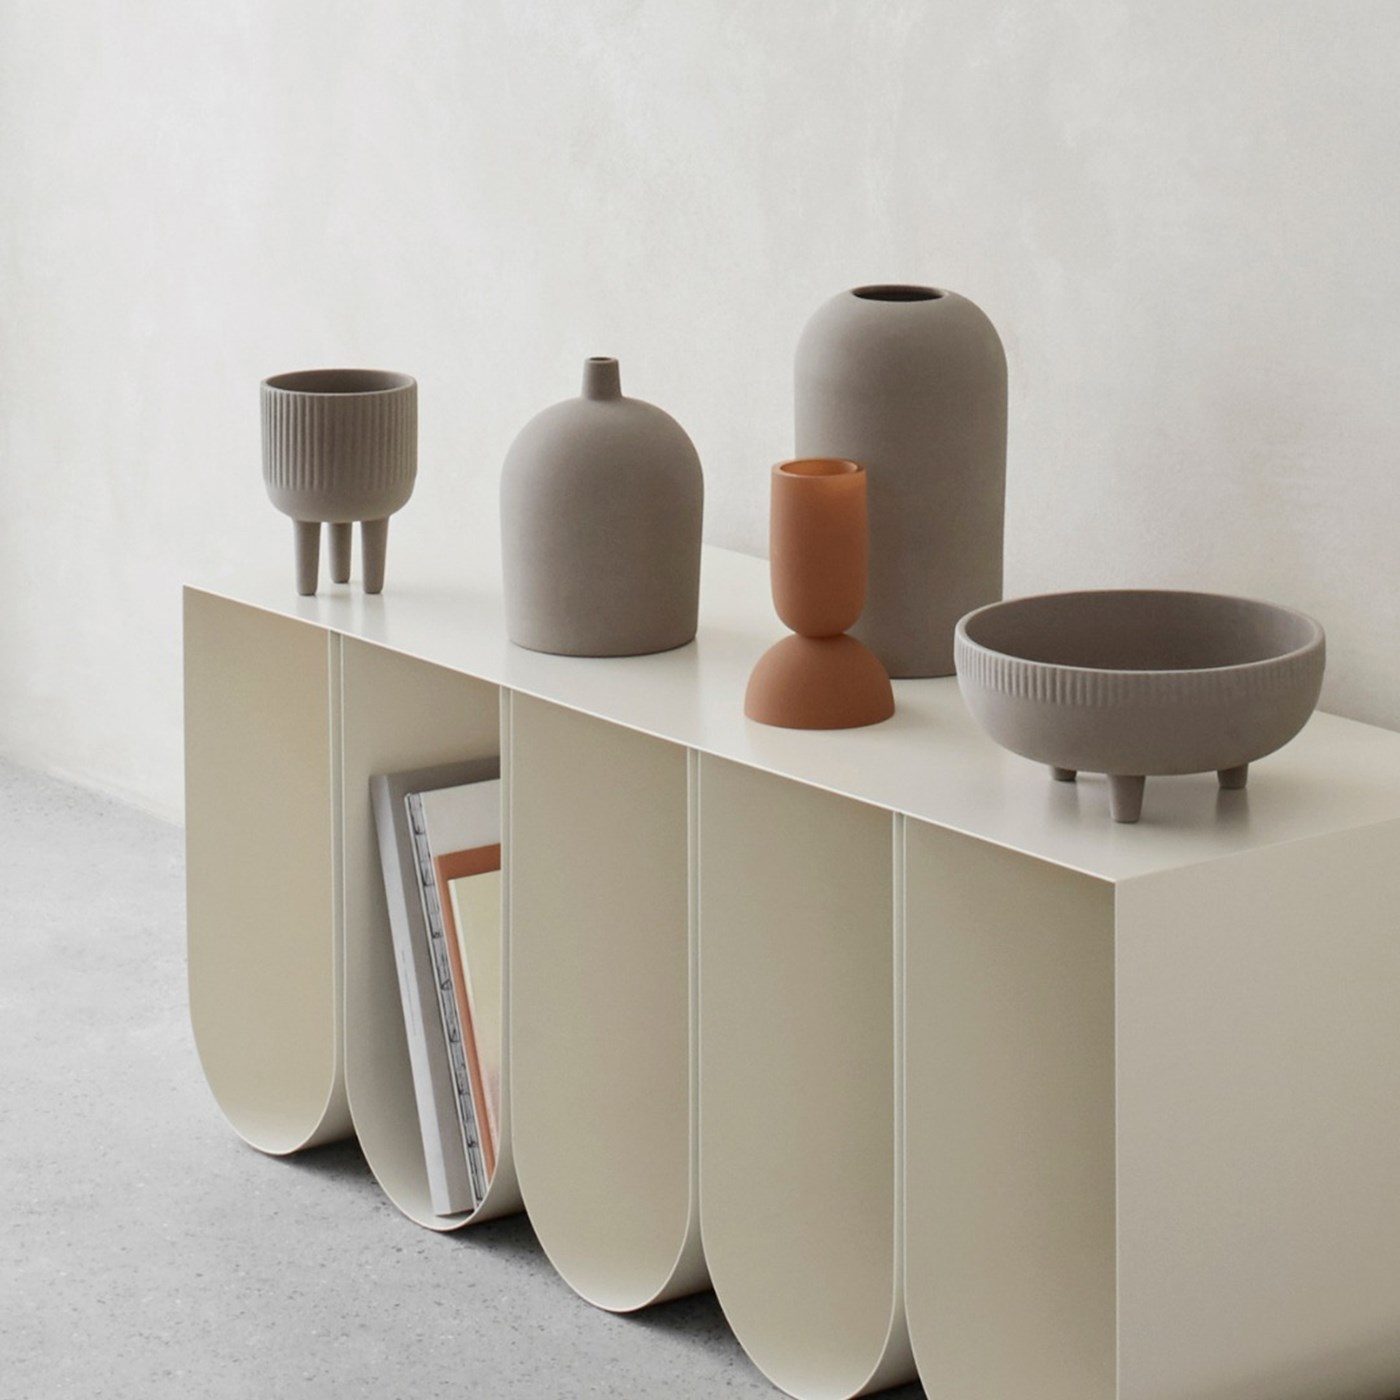 Minimalist grey and brown ceramic vessels atop a modern metal side board 